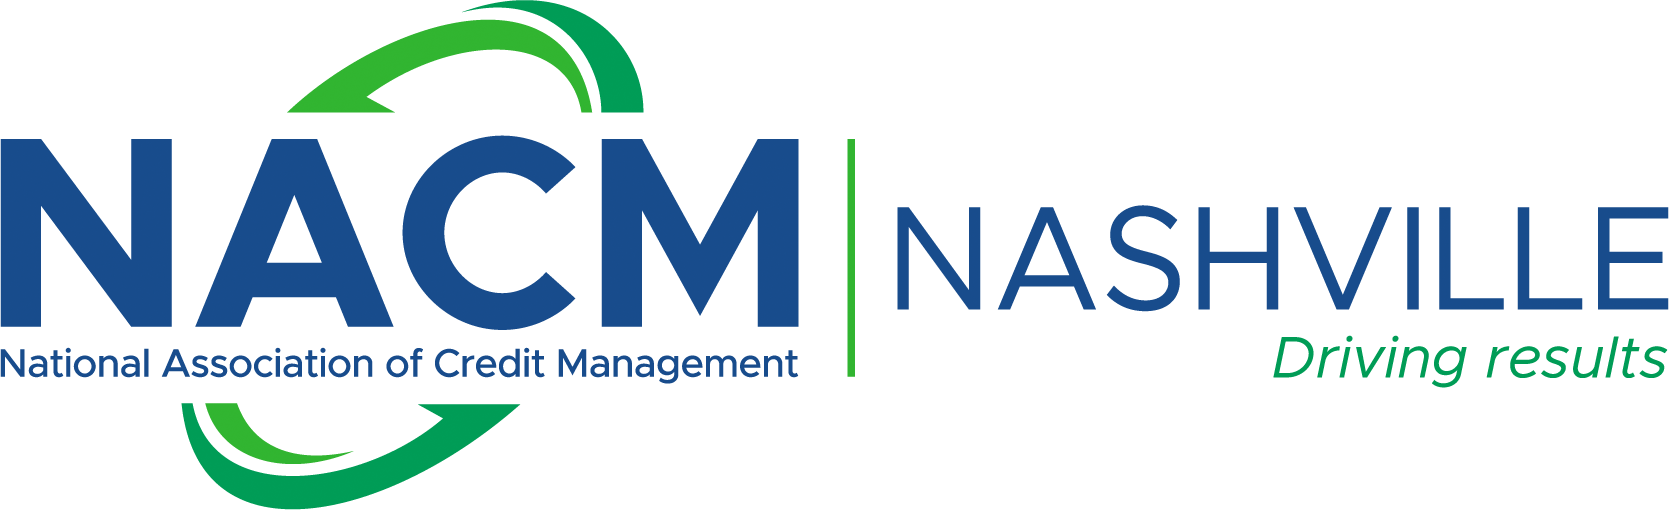 nacm nashville logo